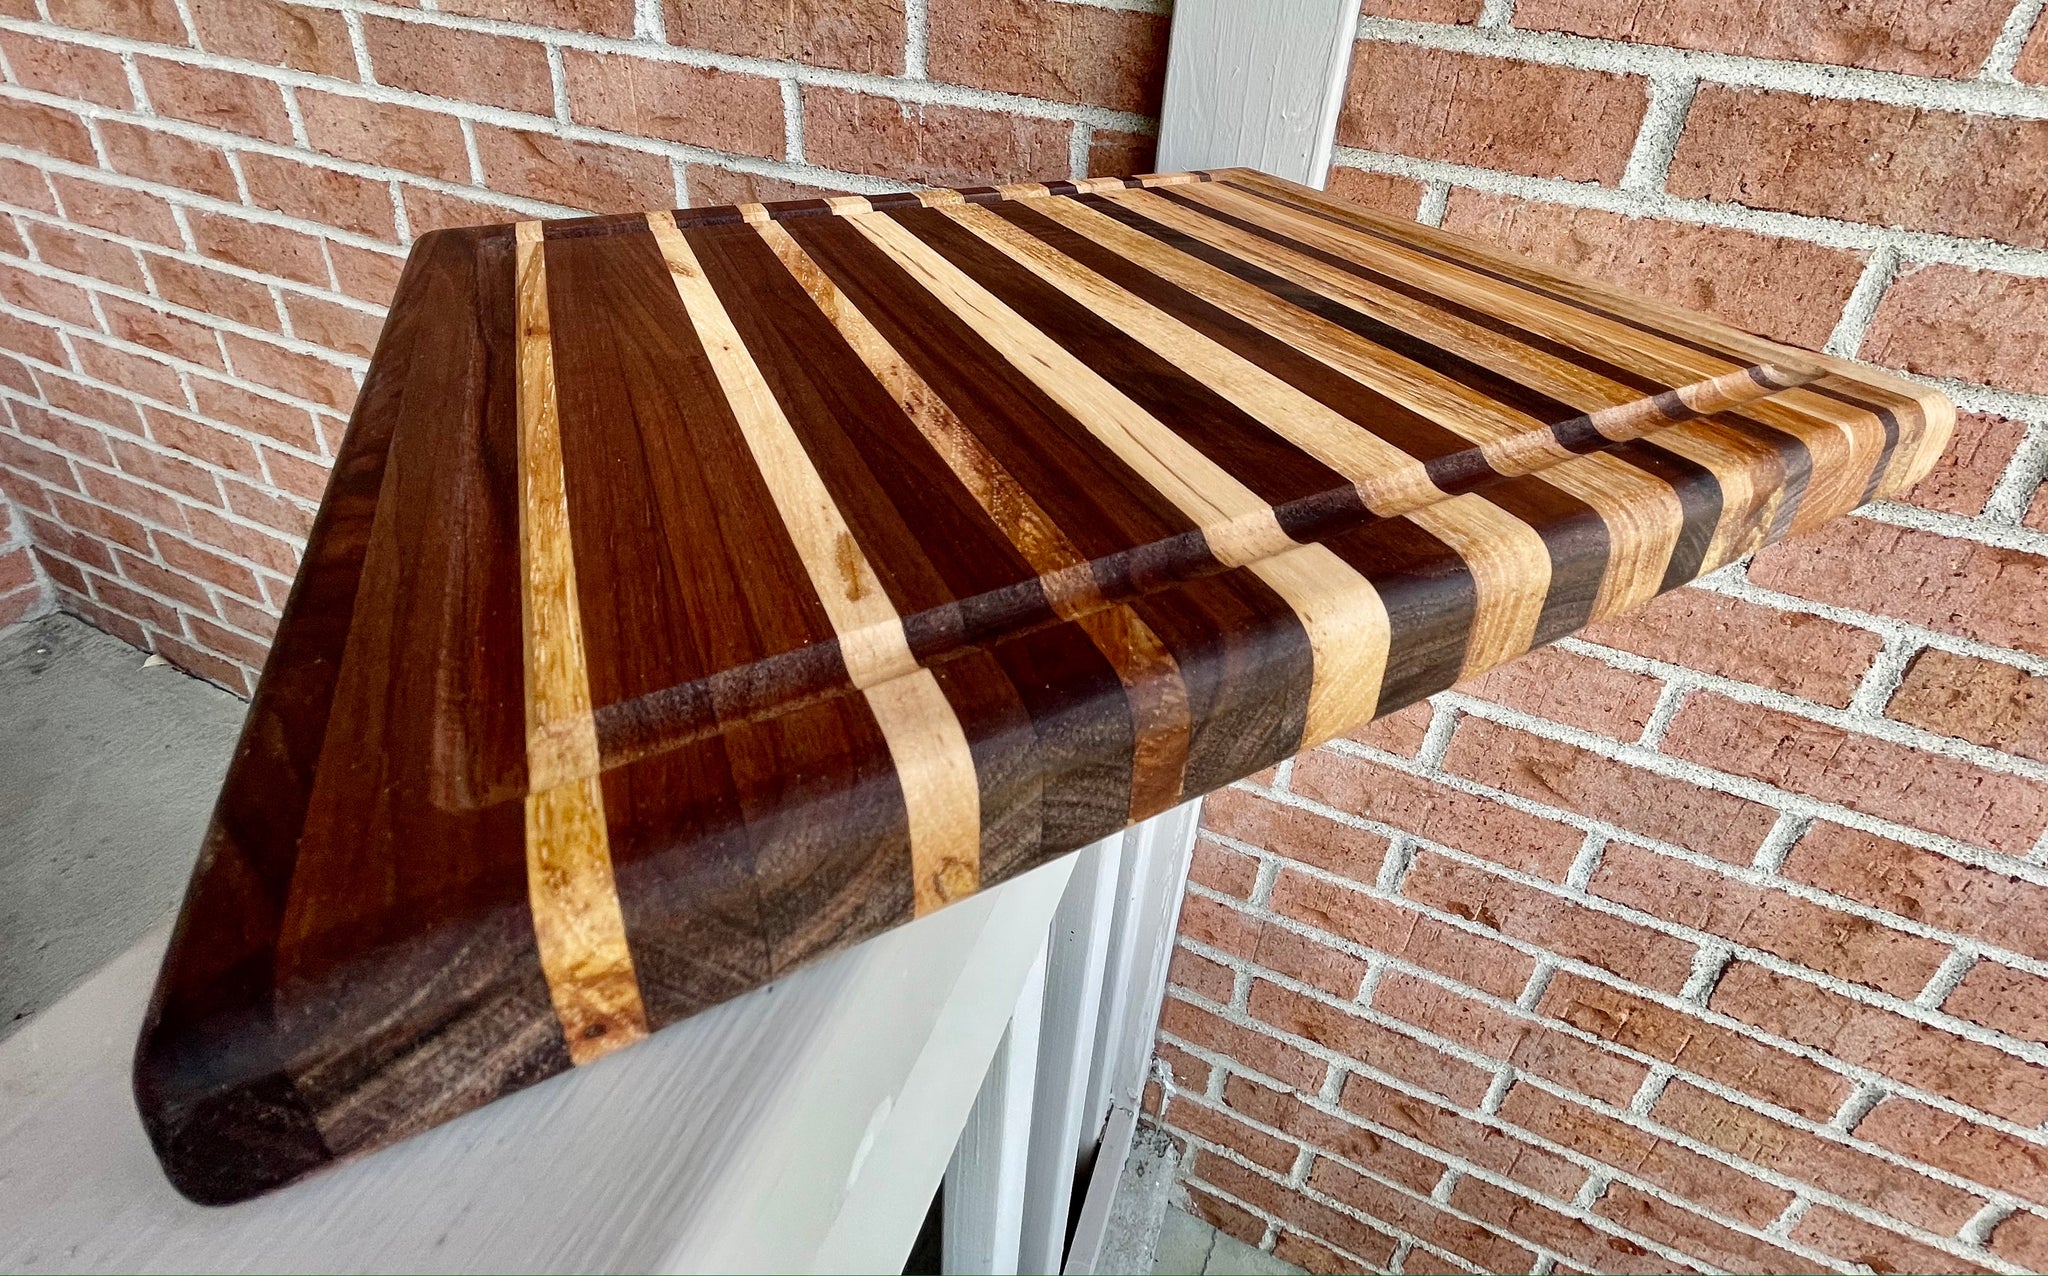 Handmade Exotic Wood Cutting Board $85